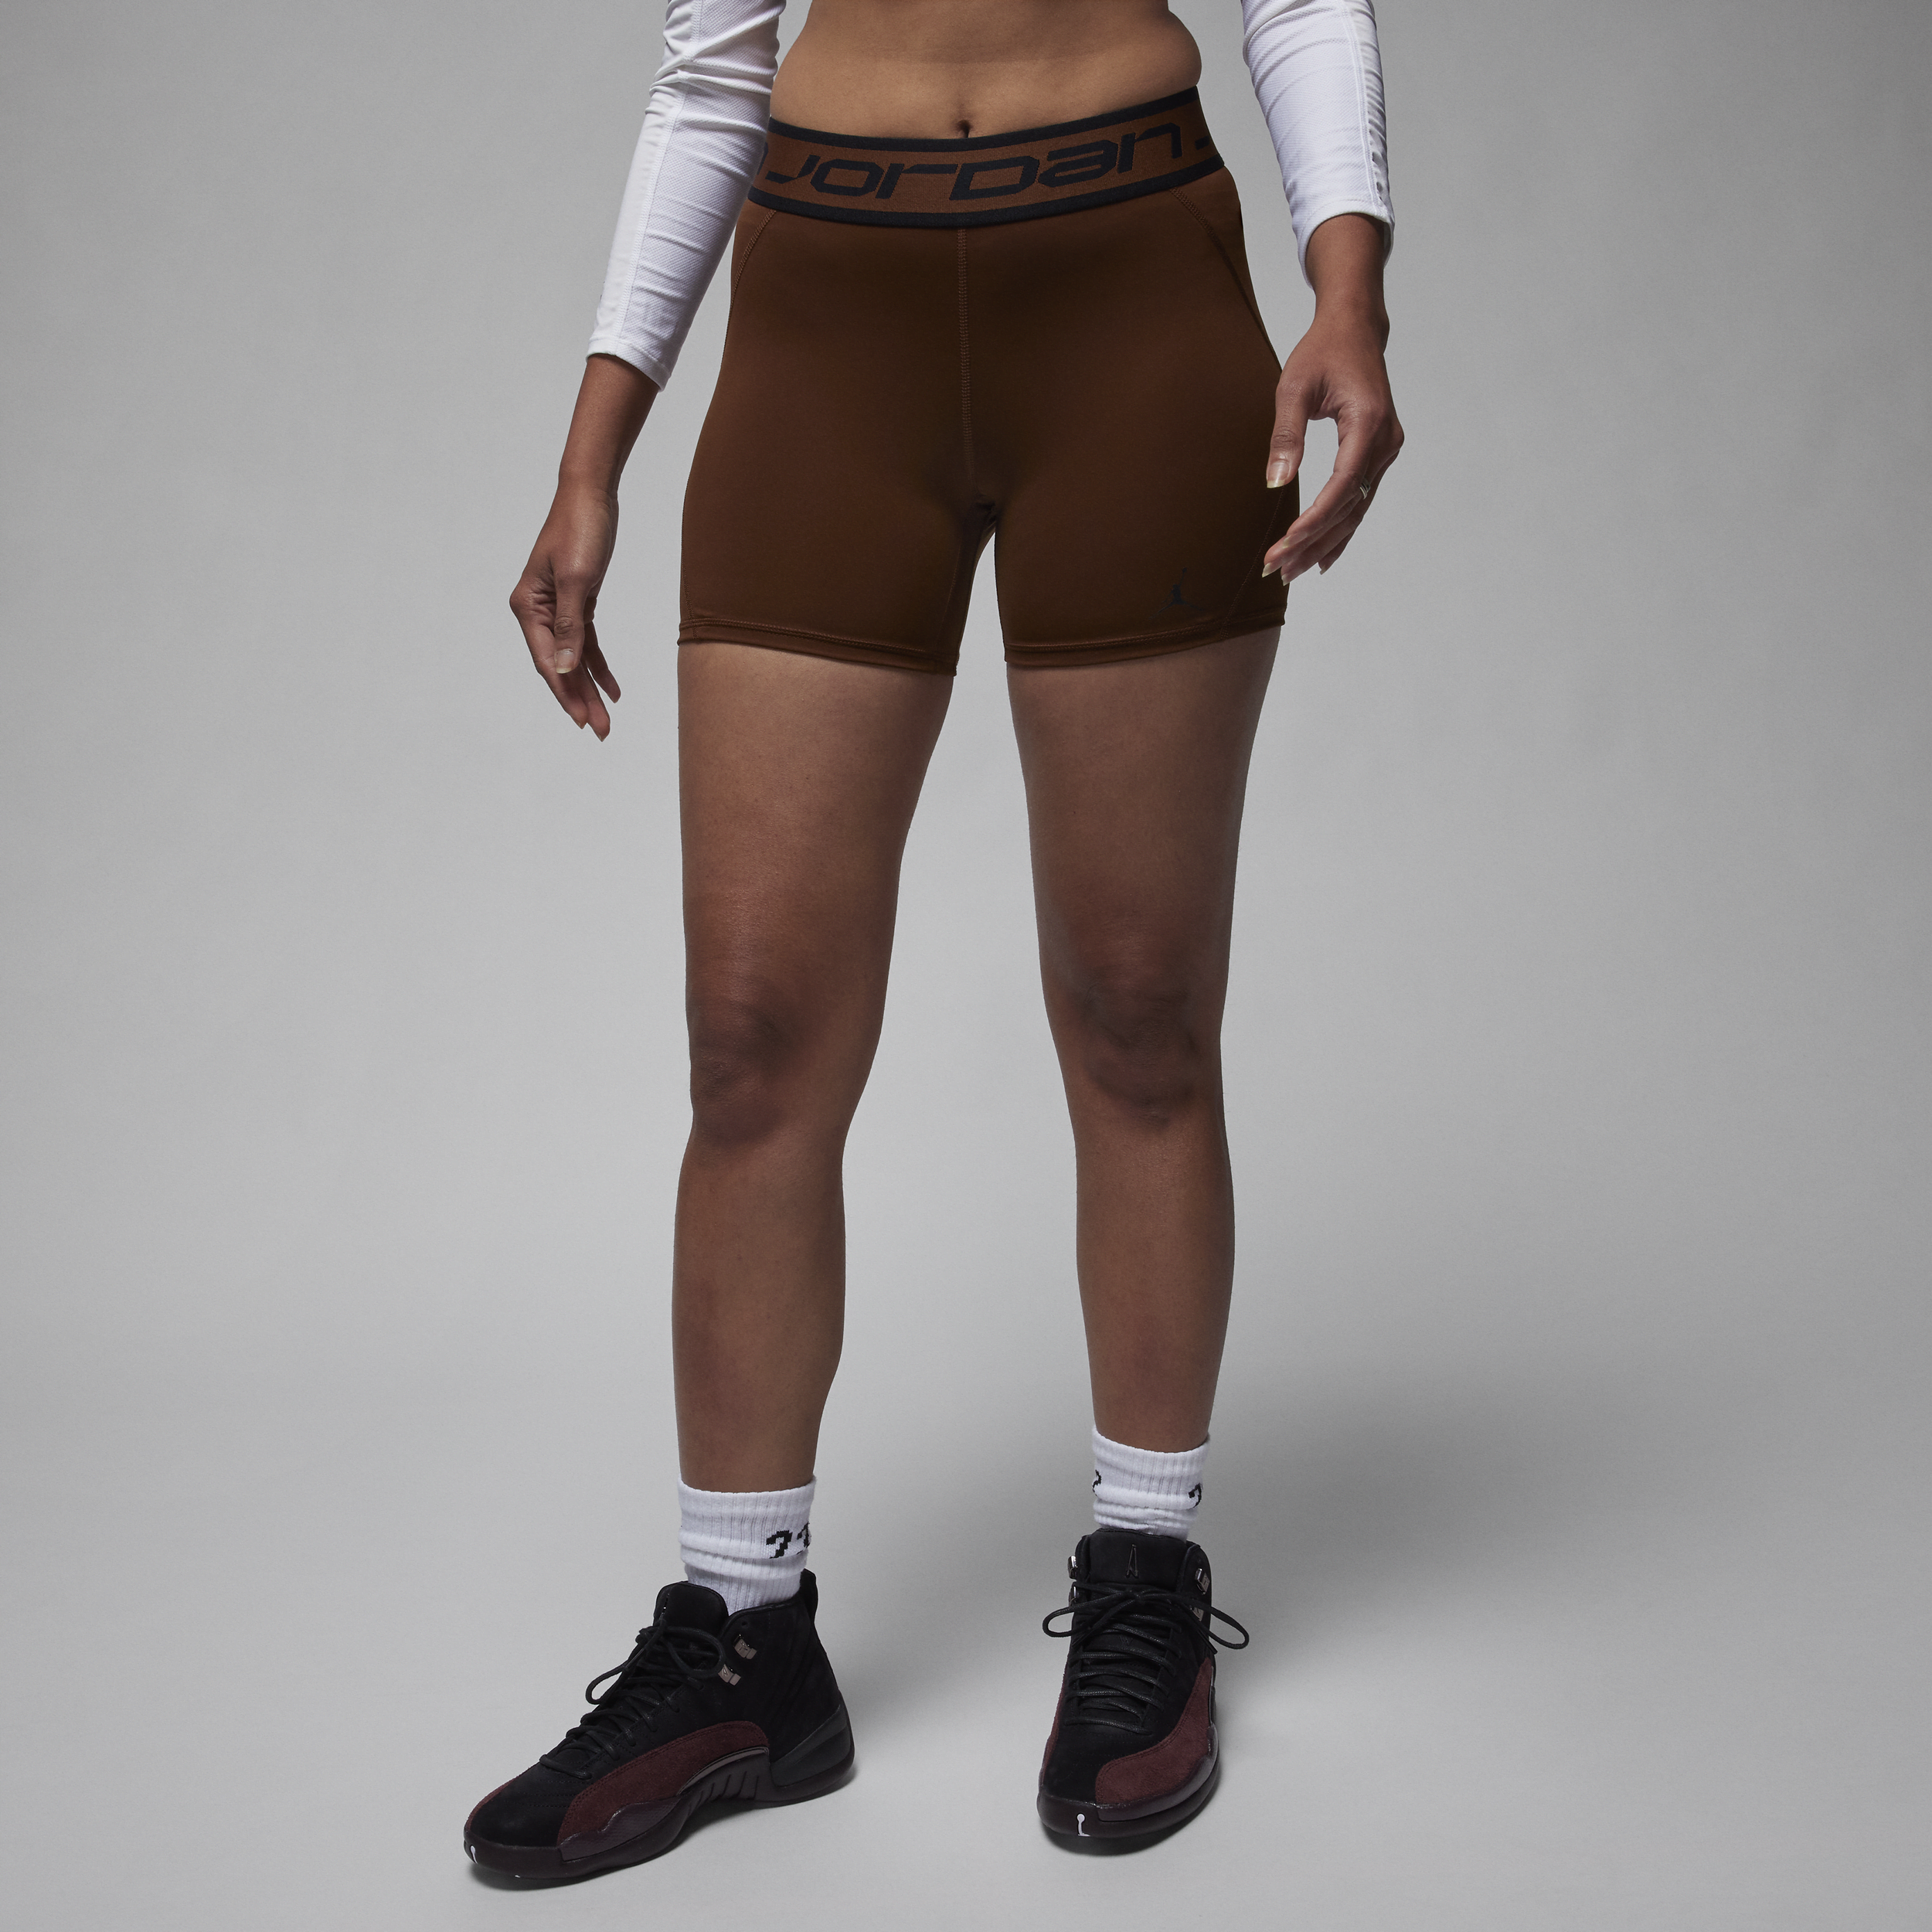 Nike Shorts 13 cm Jordan Sport – Donna - Marrone